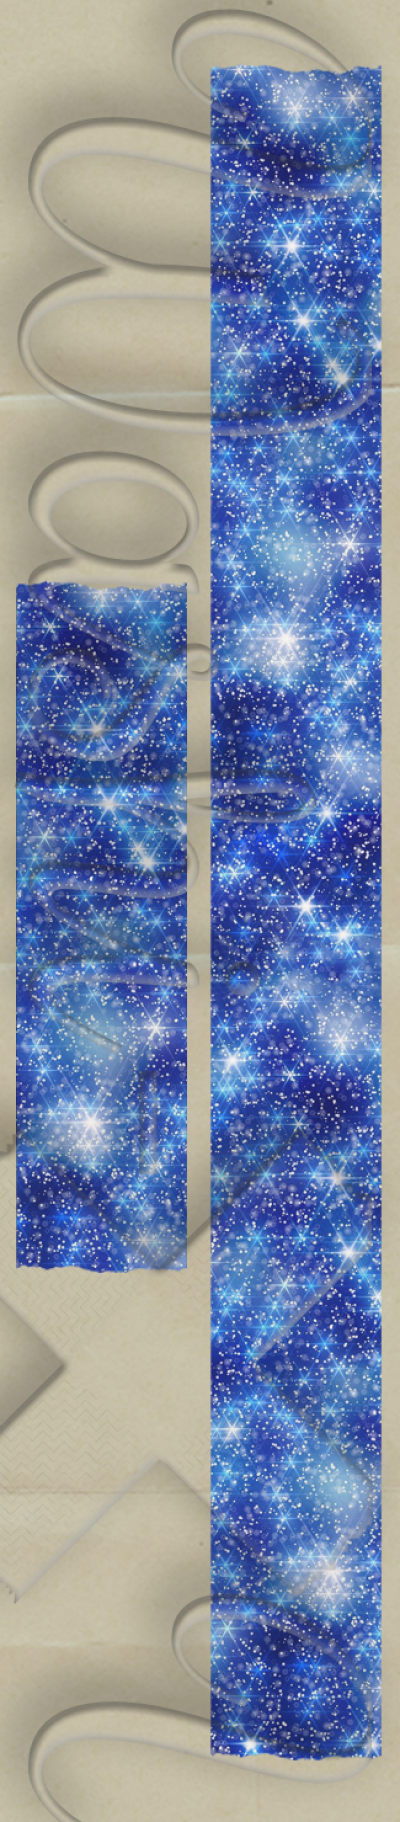 Stars patterned washi tape